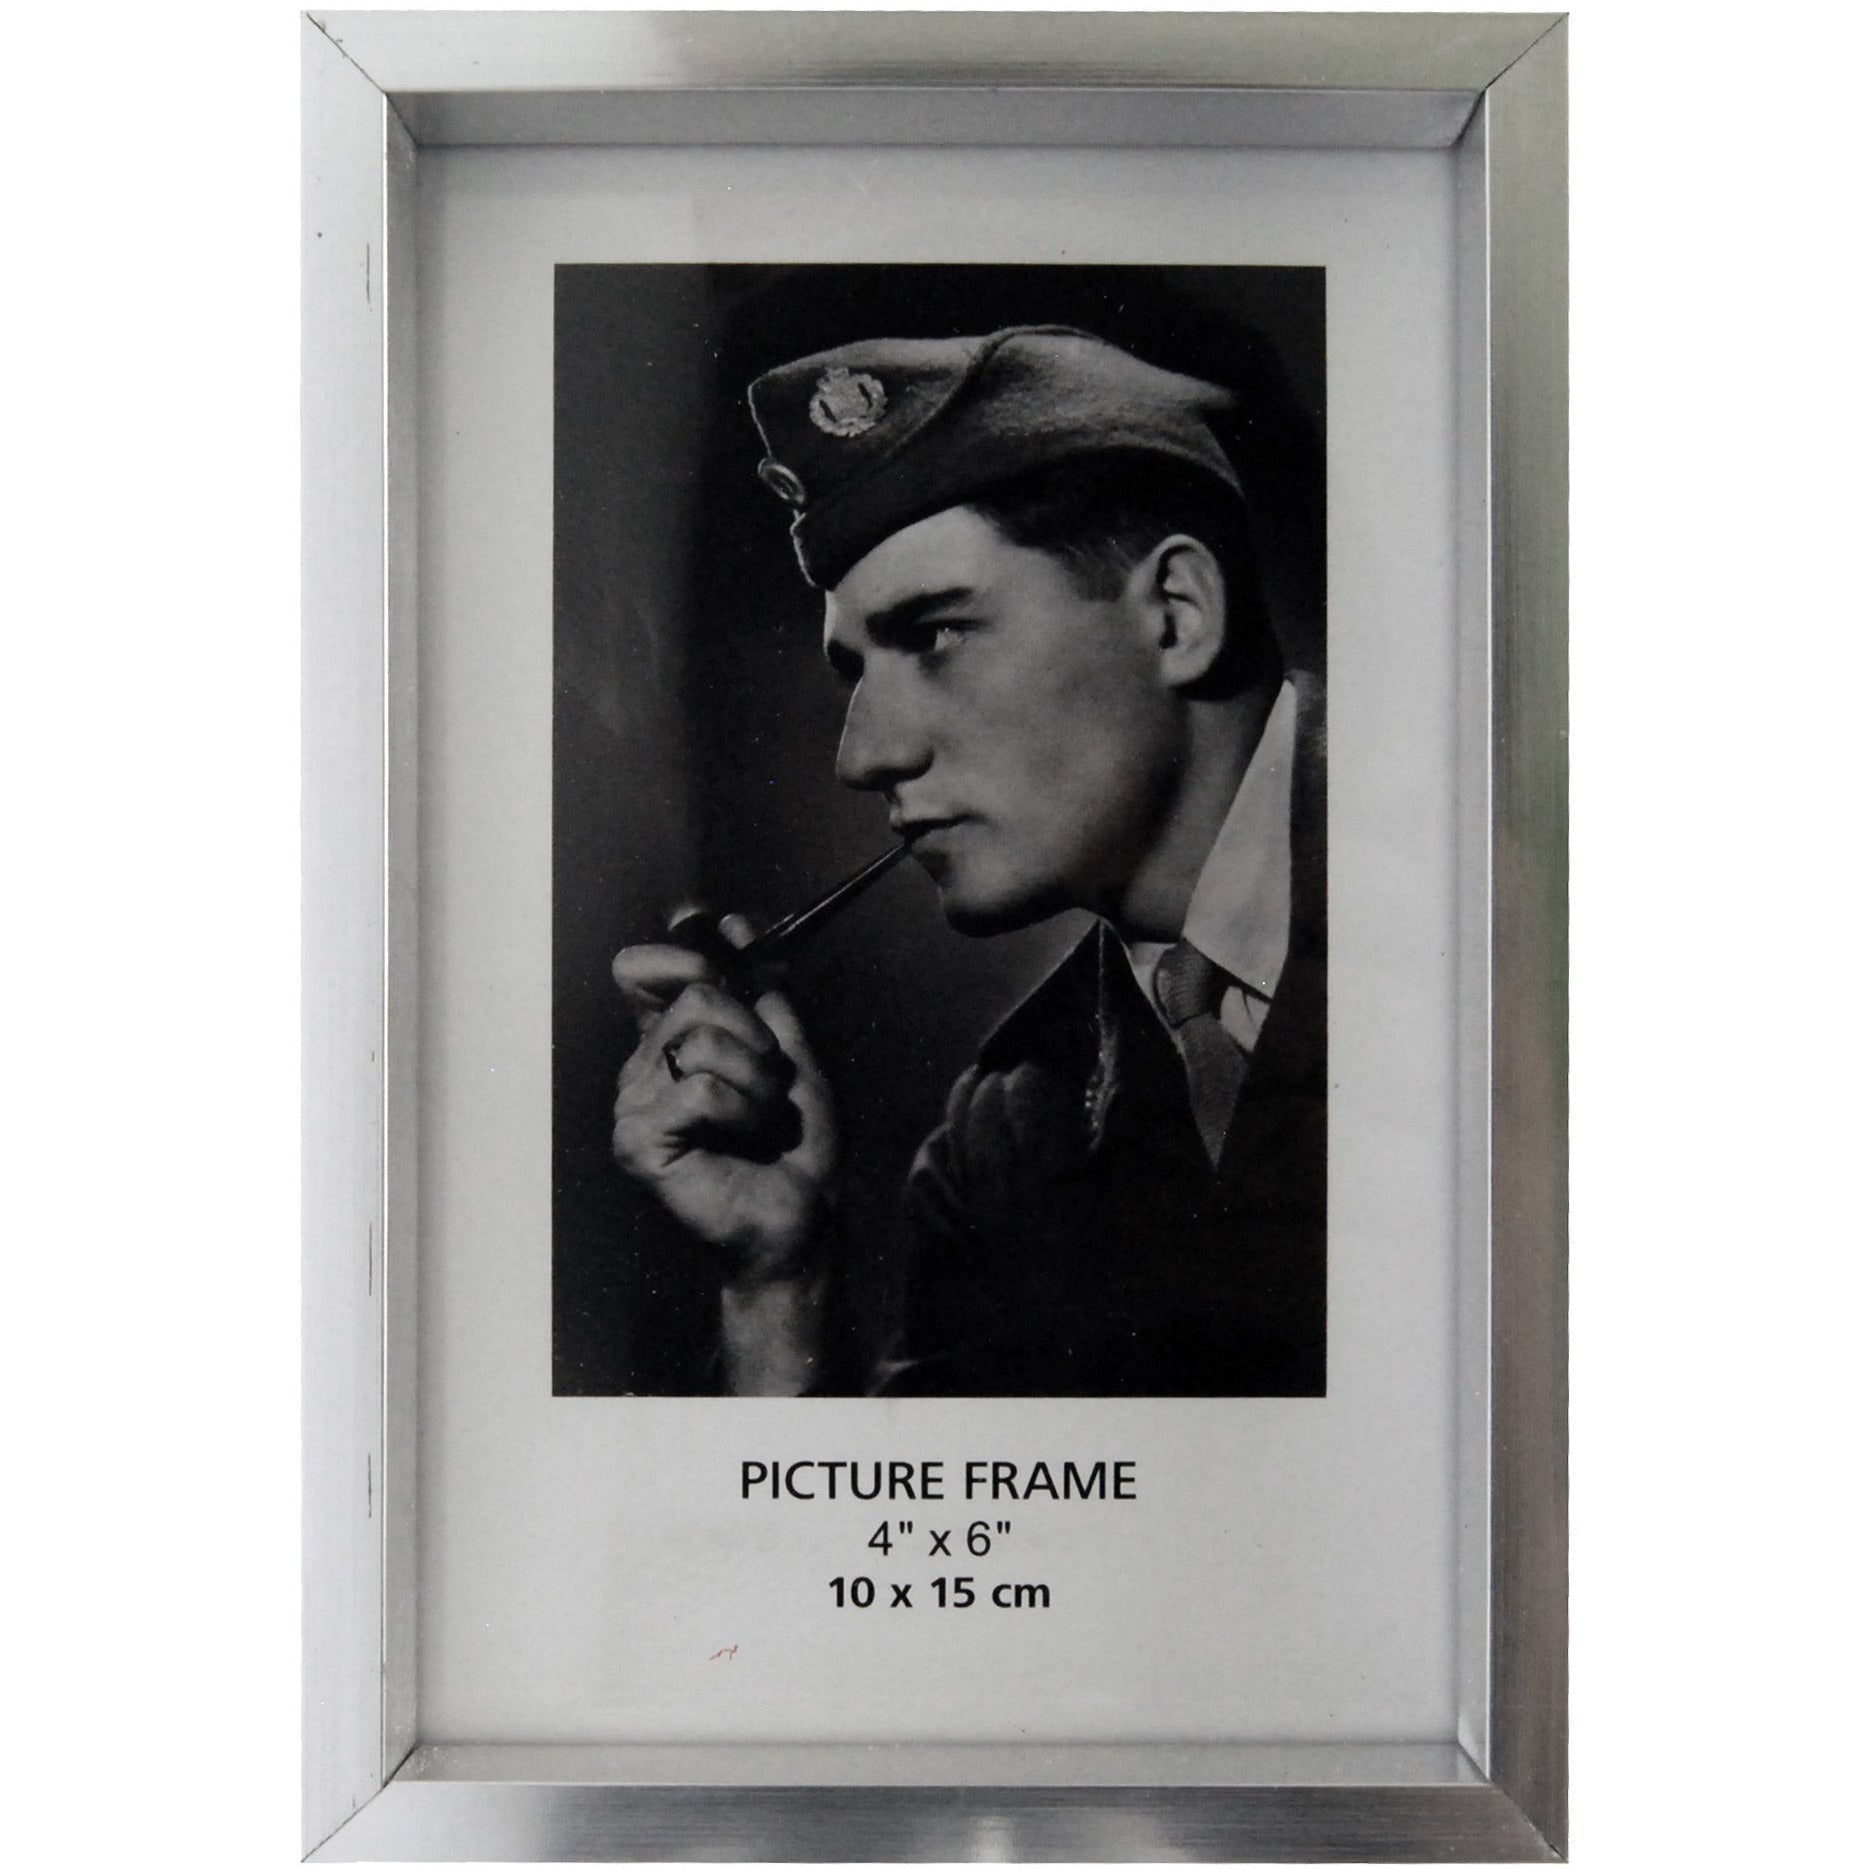 Silver Photo Frame (Photo Size 10x15cm)